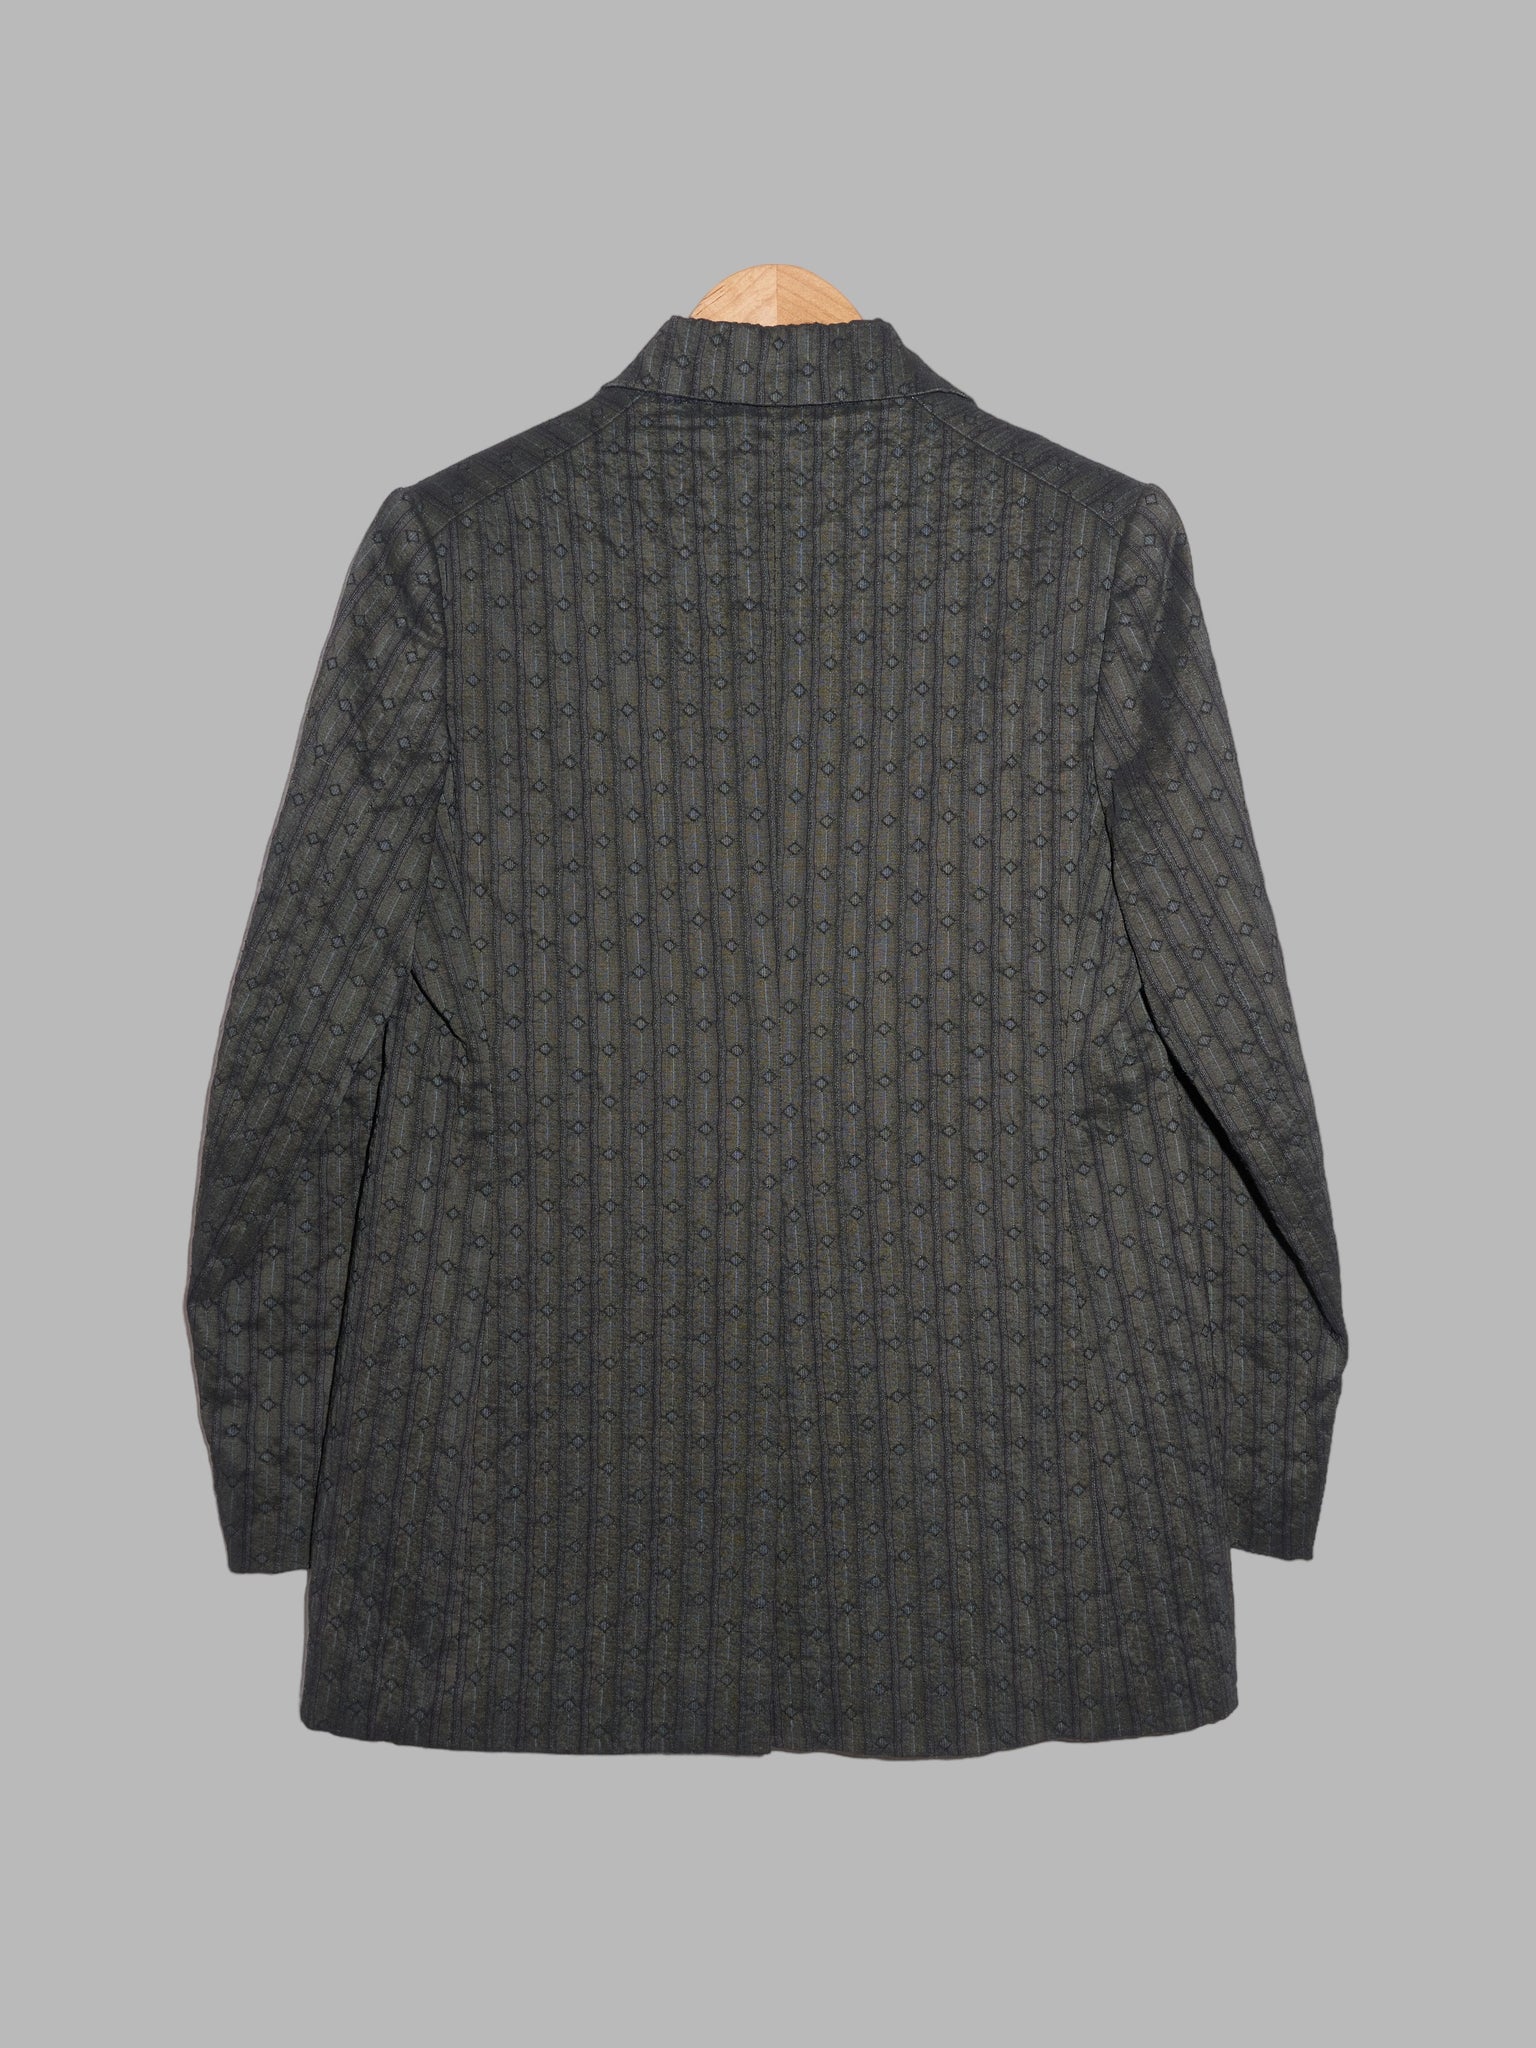 Callaghan Romeo Gigli 1980s stripe and diamond patterned wool blazer